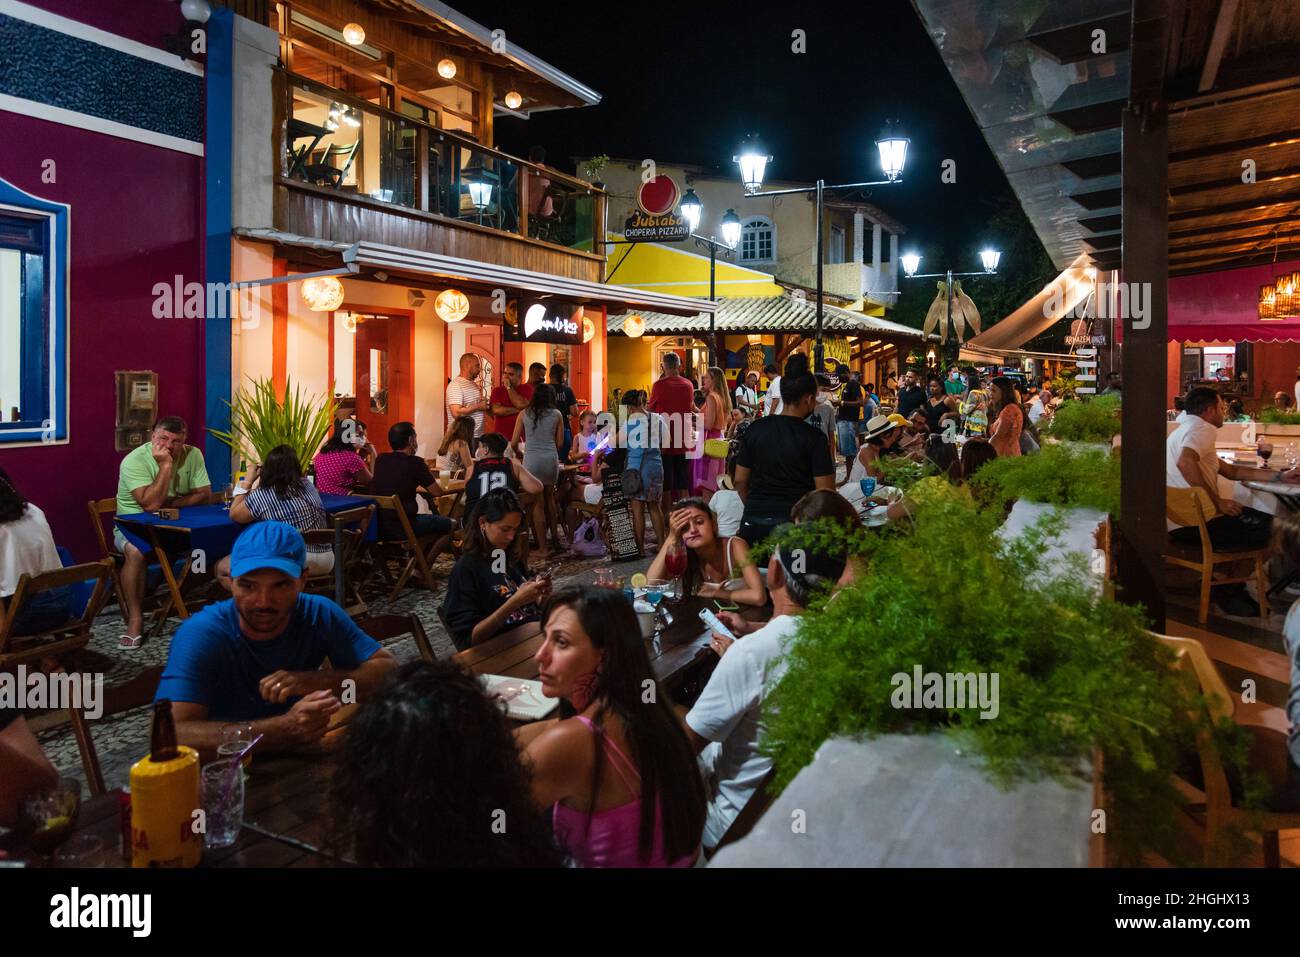 Outdoor dining with people eating, drinking, talking, and walking at Beco das Garrafas in Prado, Bahia, Brazil. Stock Photo